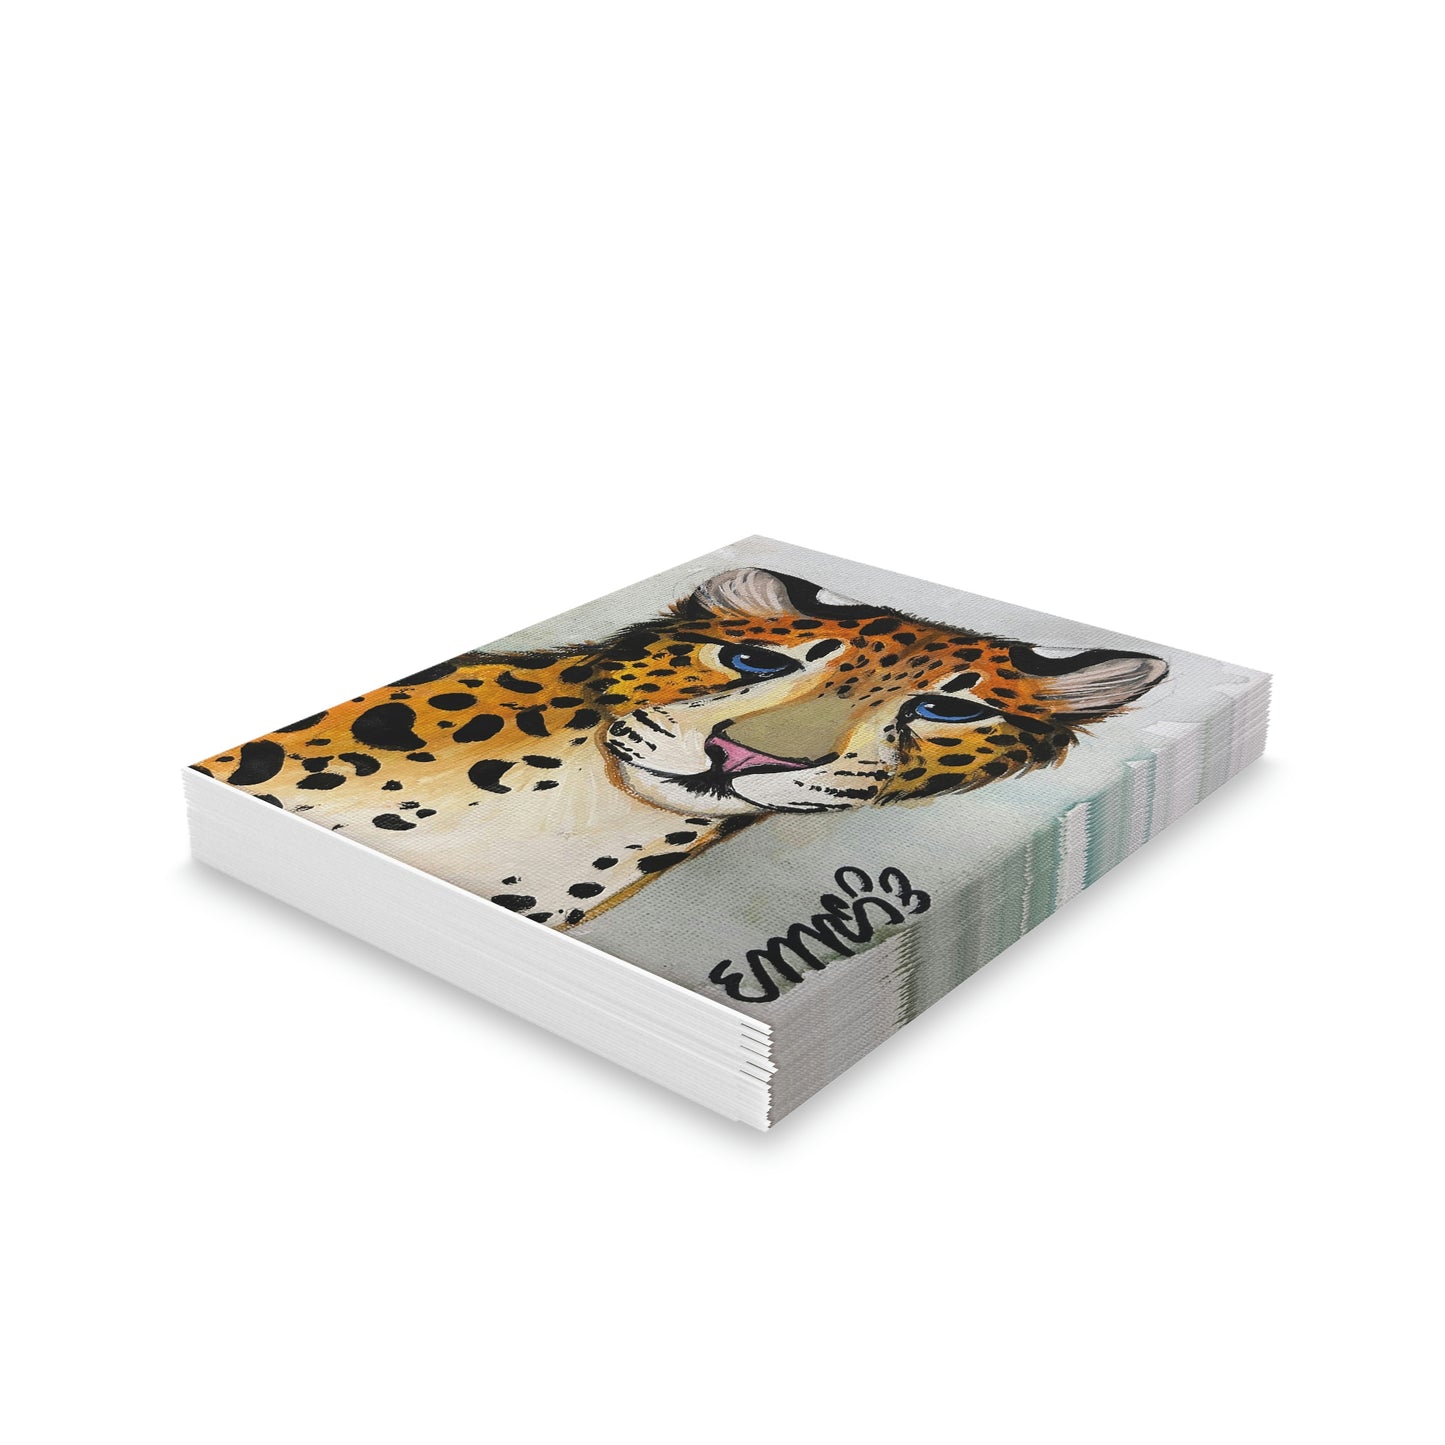 Endangered Amur Leopard Cub - Greeting cards